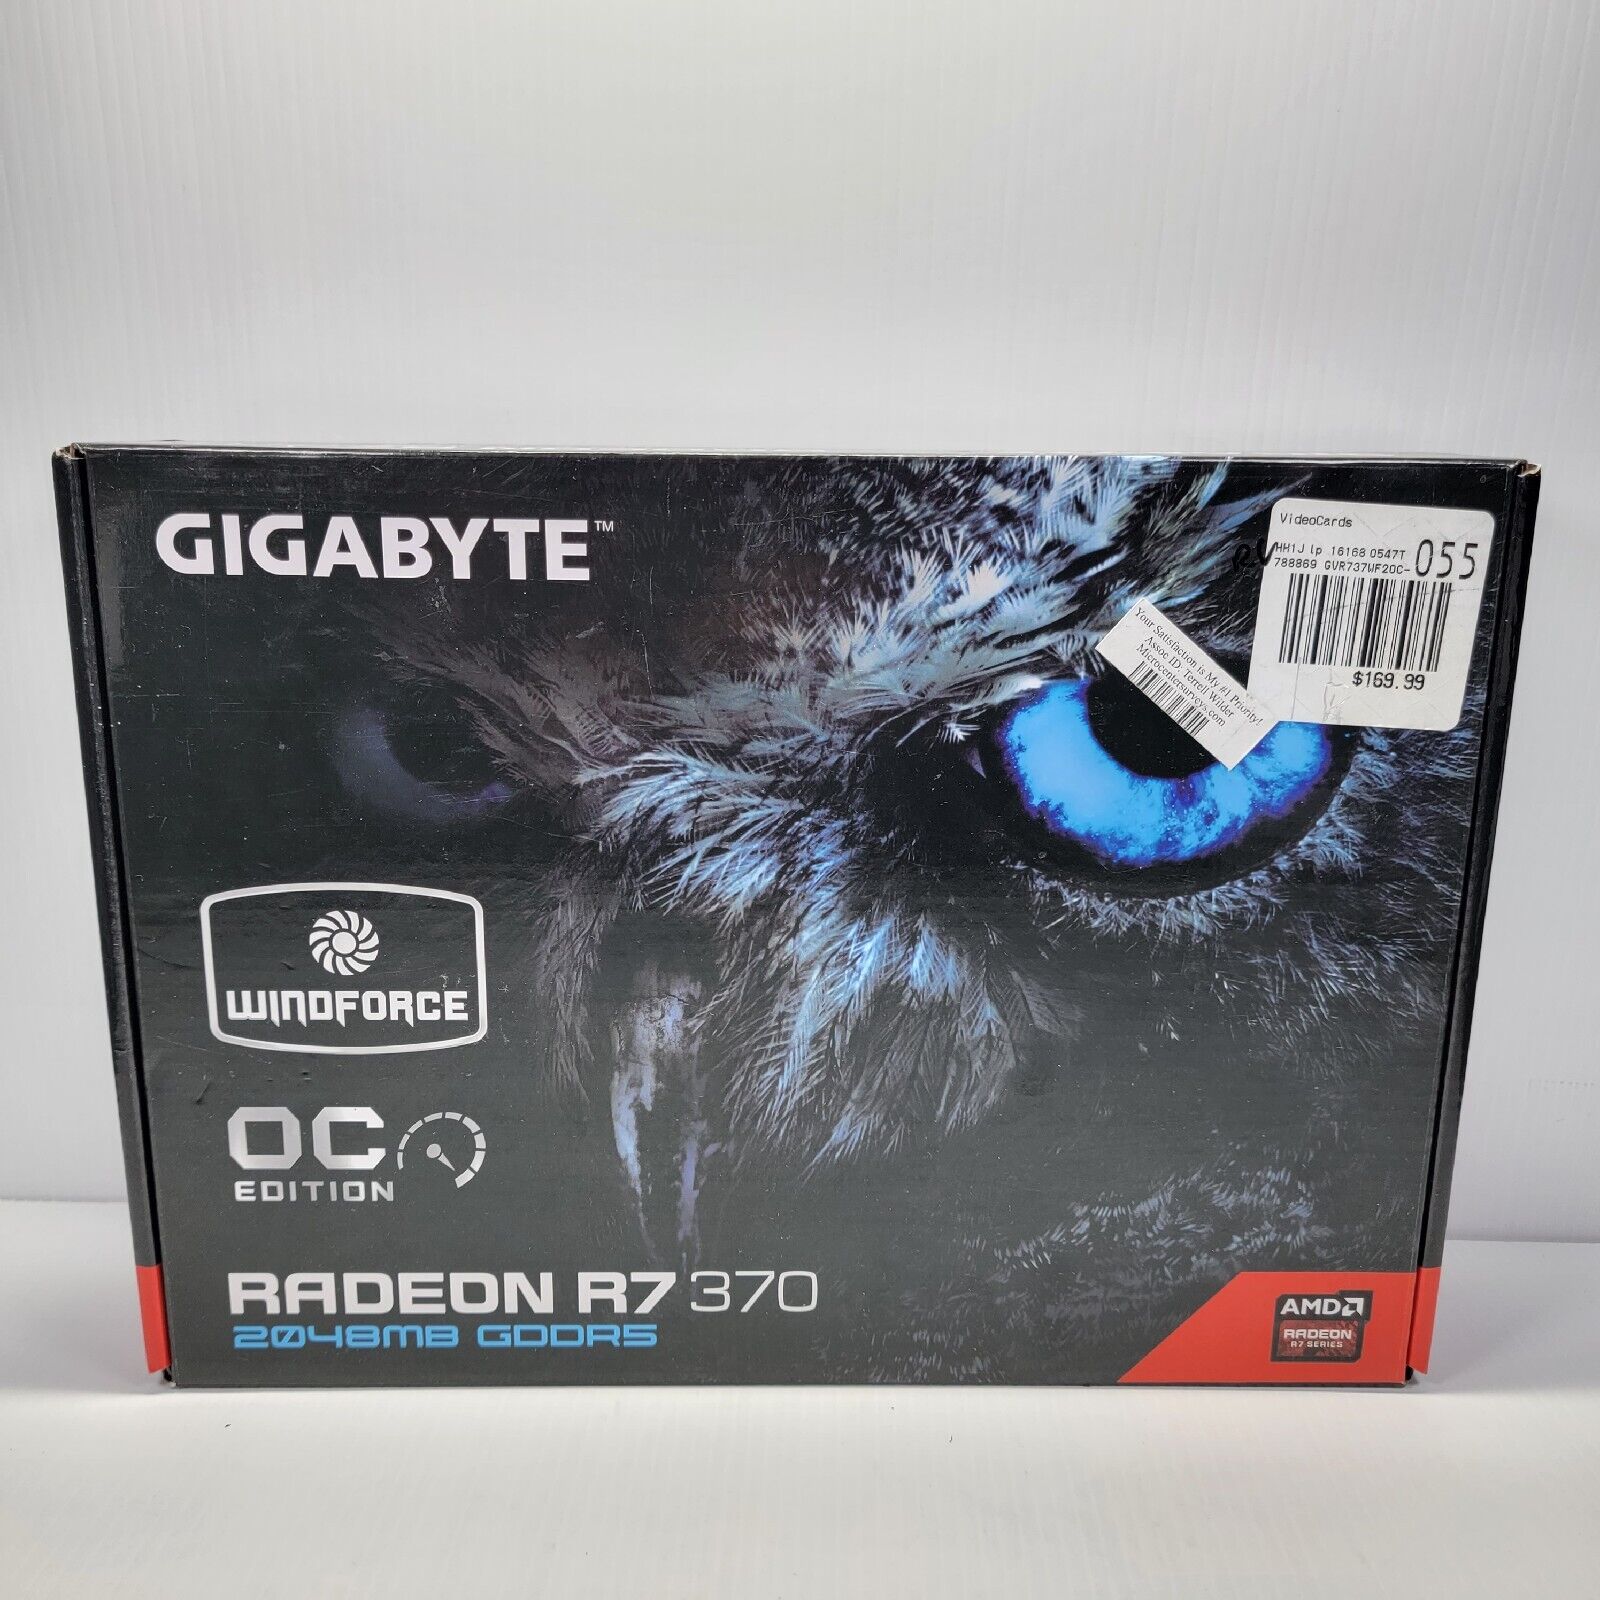 Gigabyte Windforce OC Radeon R7 370 2048MB GDDR5 GPU